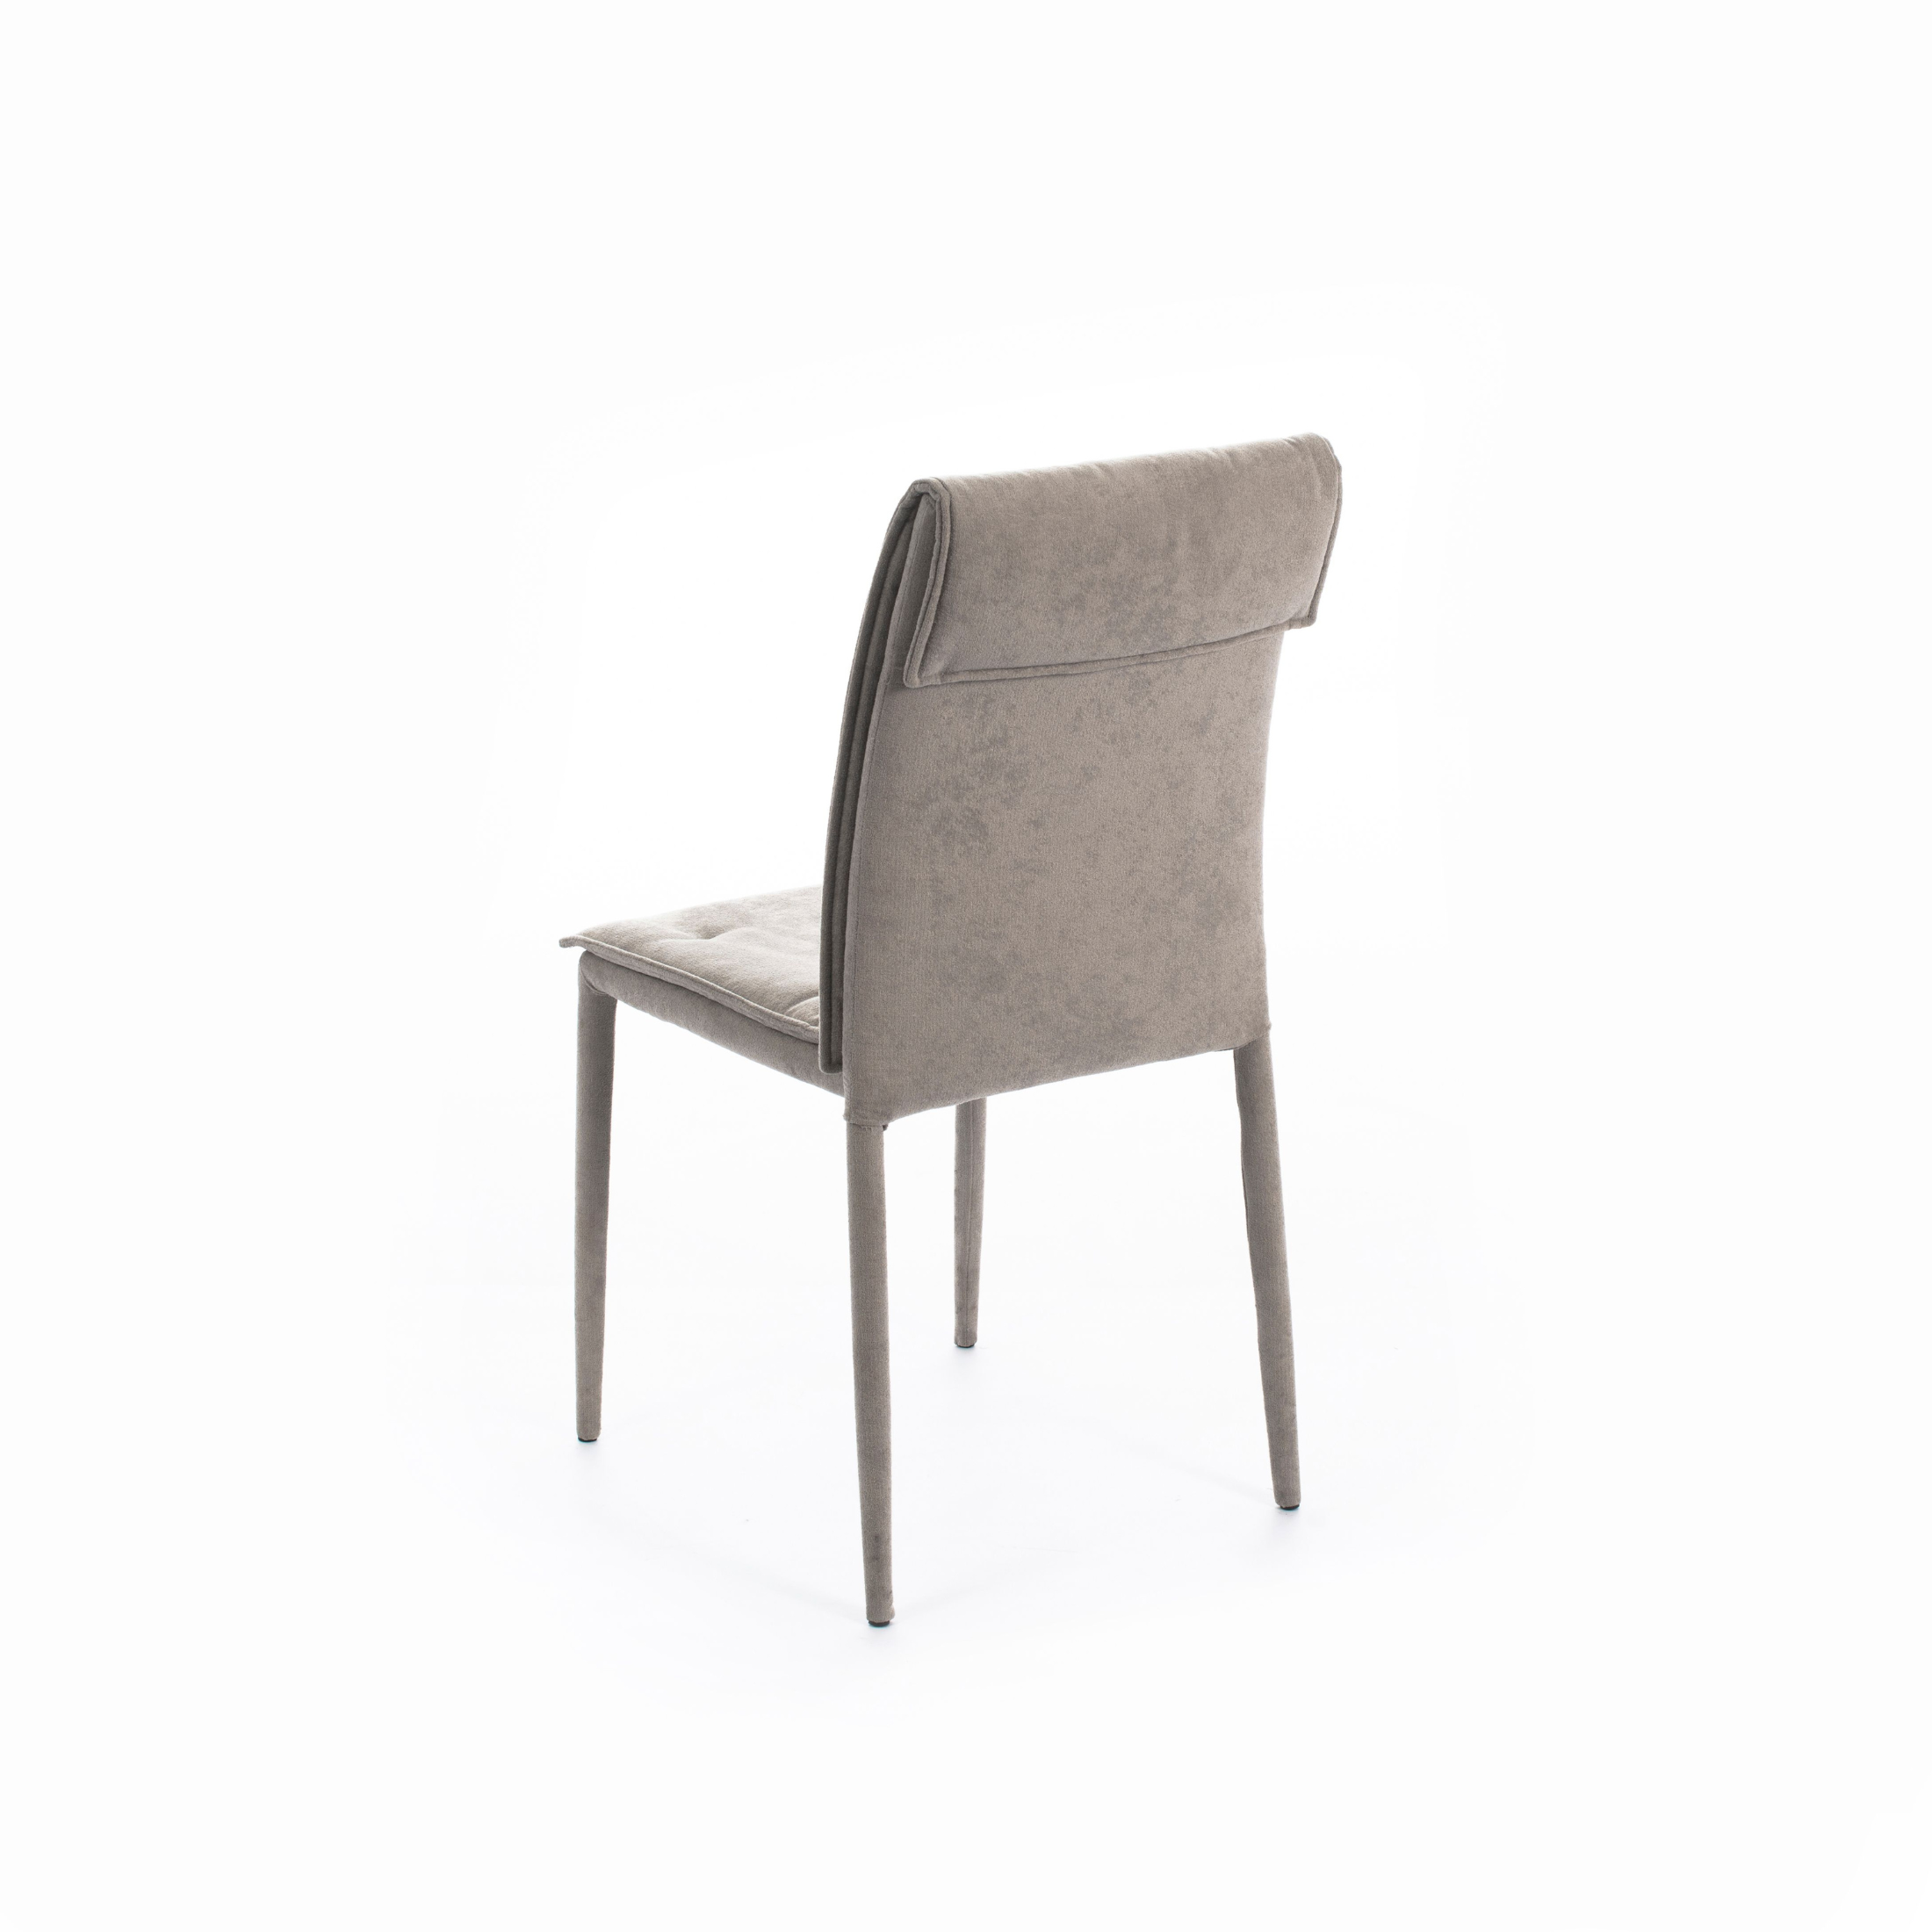 Set di sedie imbottite in tessuto "Wanda" moderne con gambe in metallo rivestite cm 44x56 91h